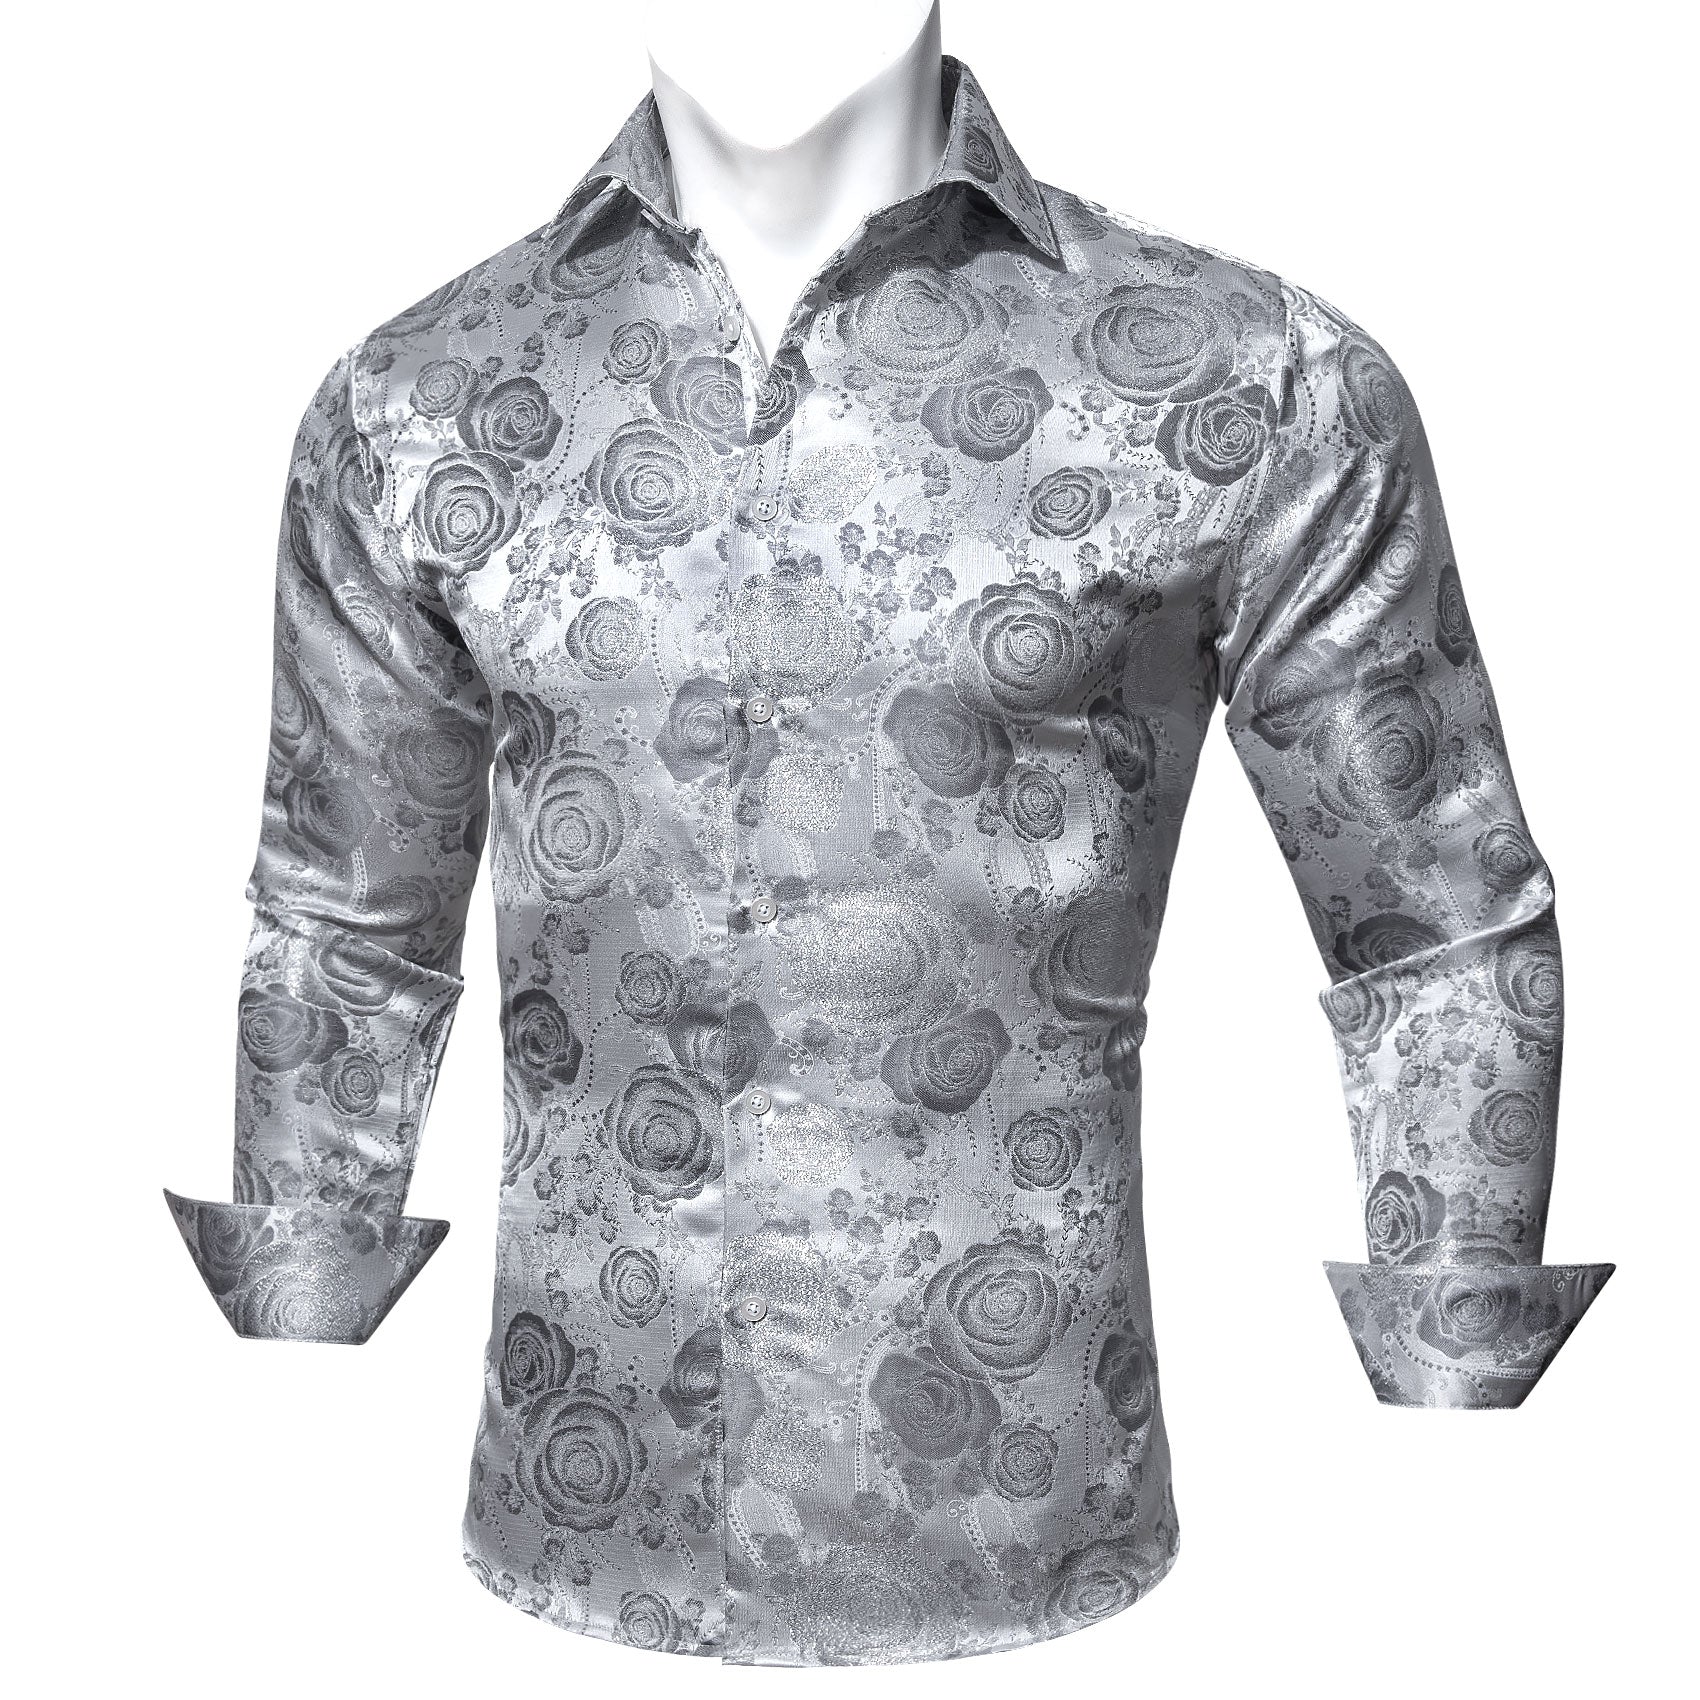 Barry.wang Button Down Shirt Silver Flower Men's Silk Long Sleeve Shirt Fashion